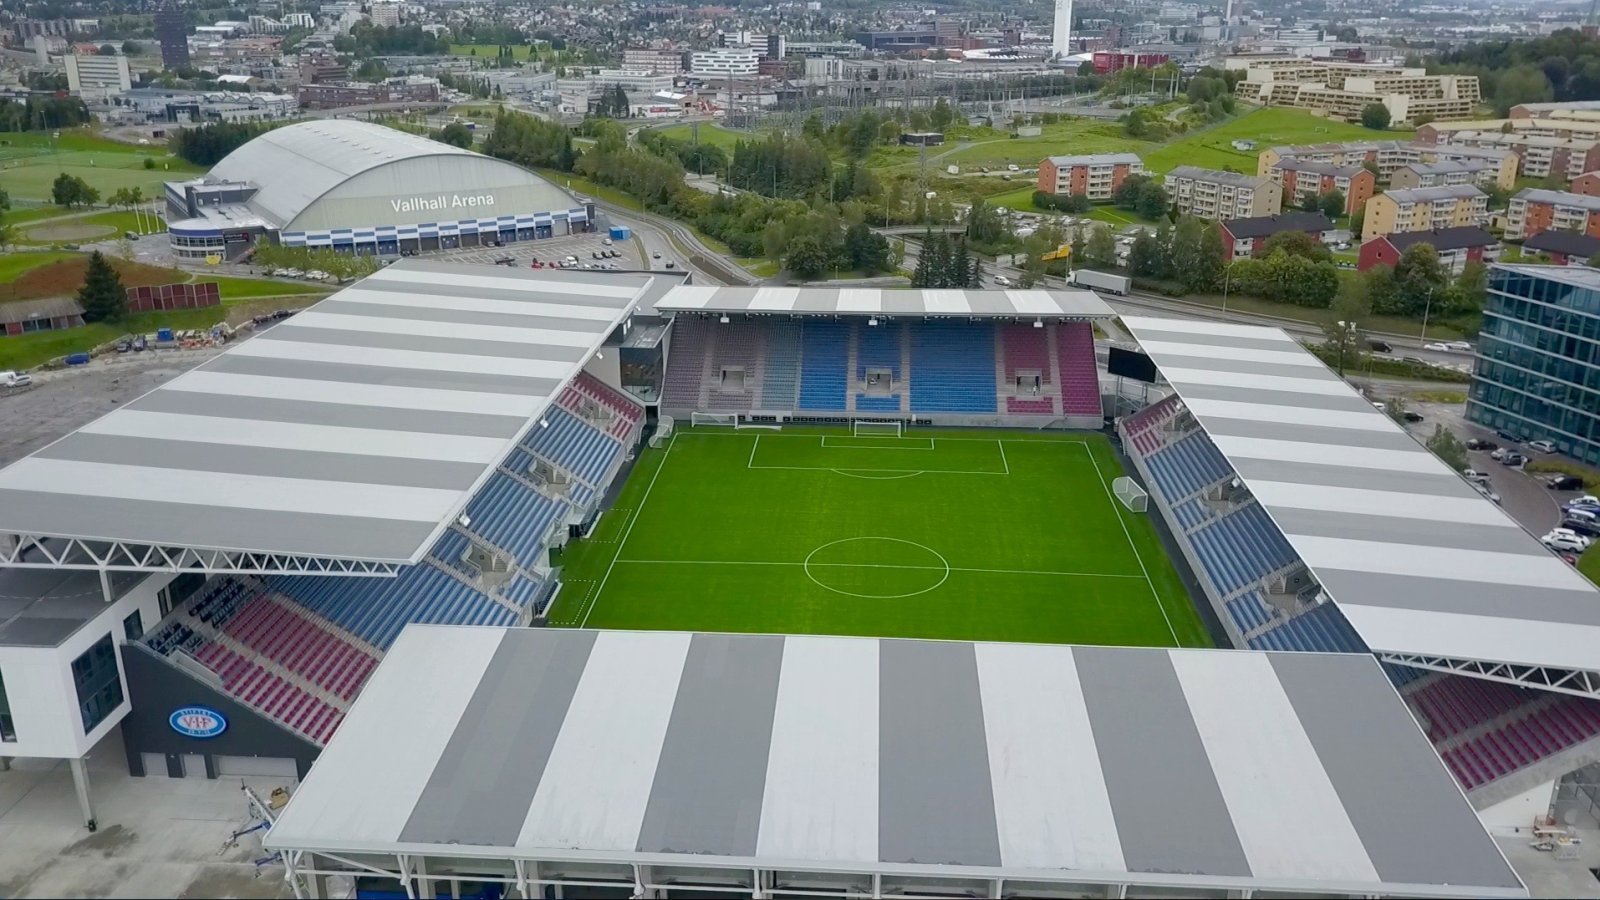 Intility Arena (Vålerenga Stadion) – Stadiony.net